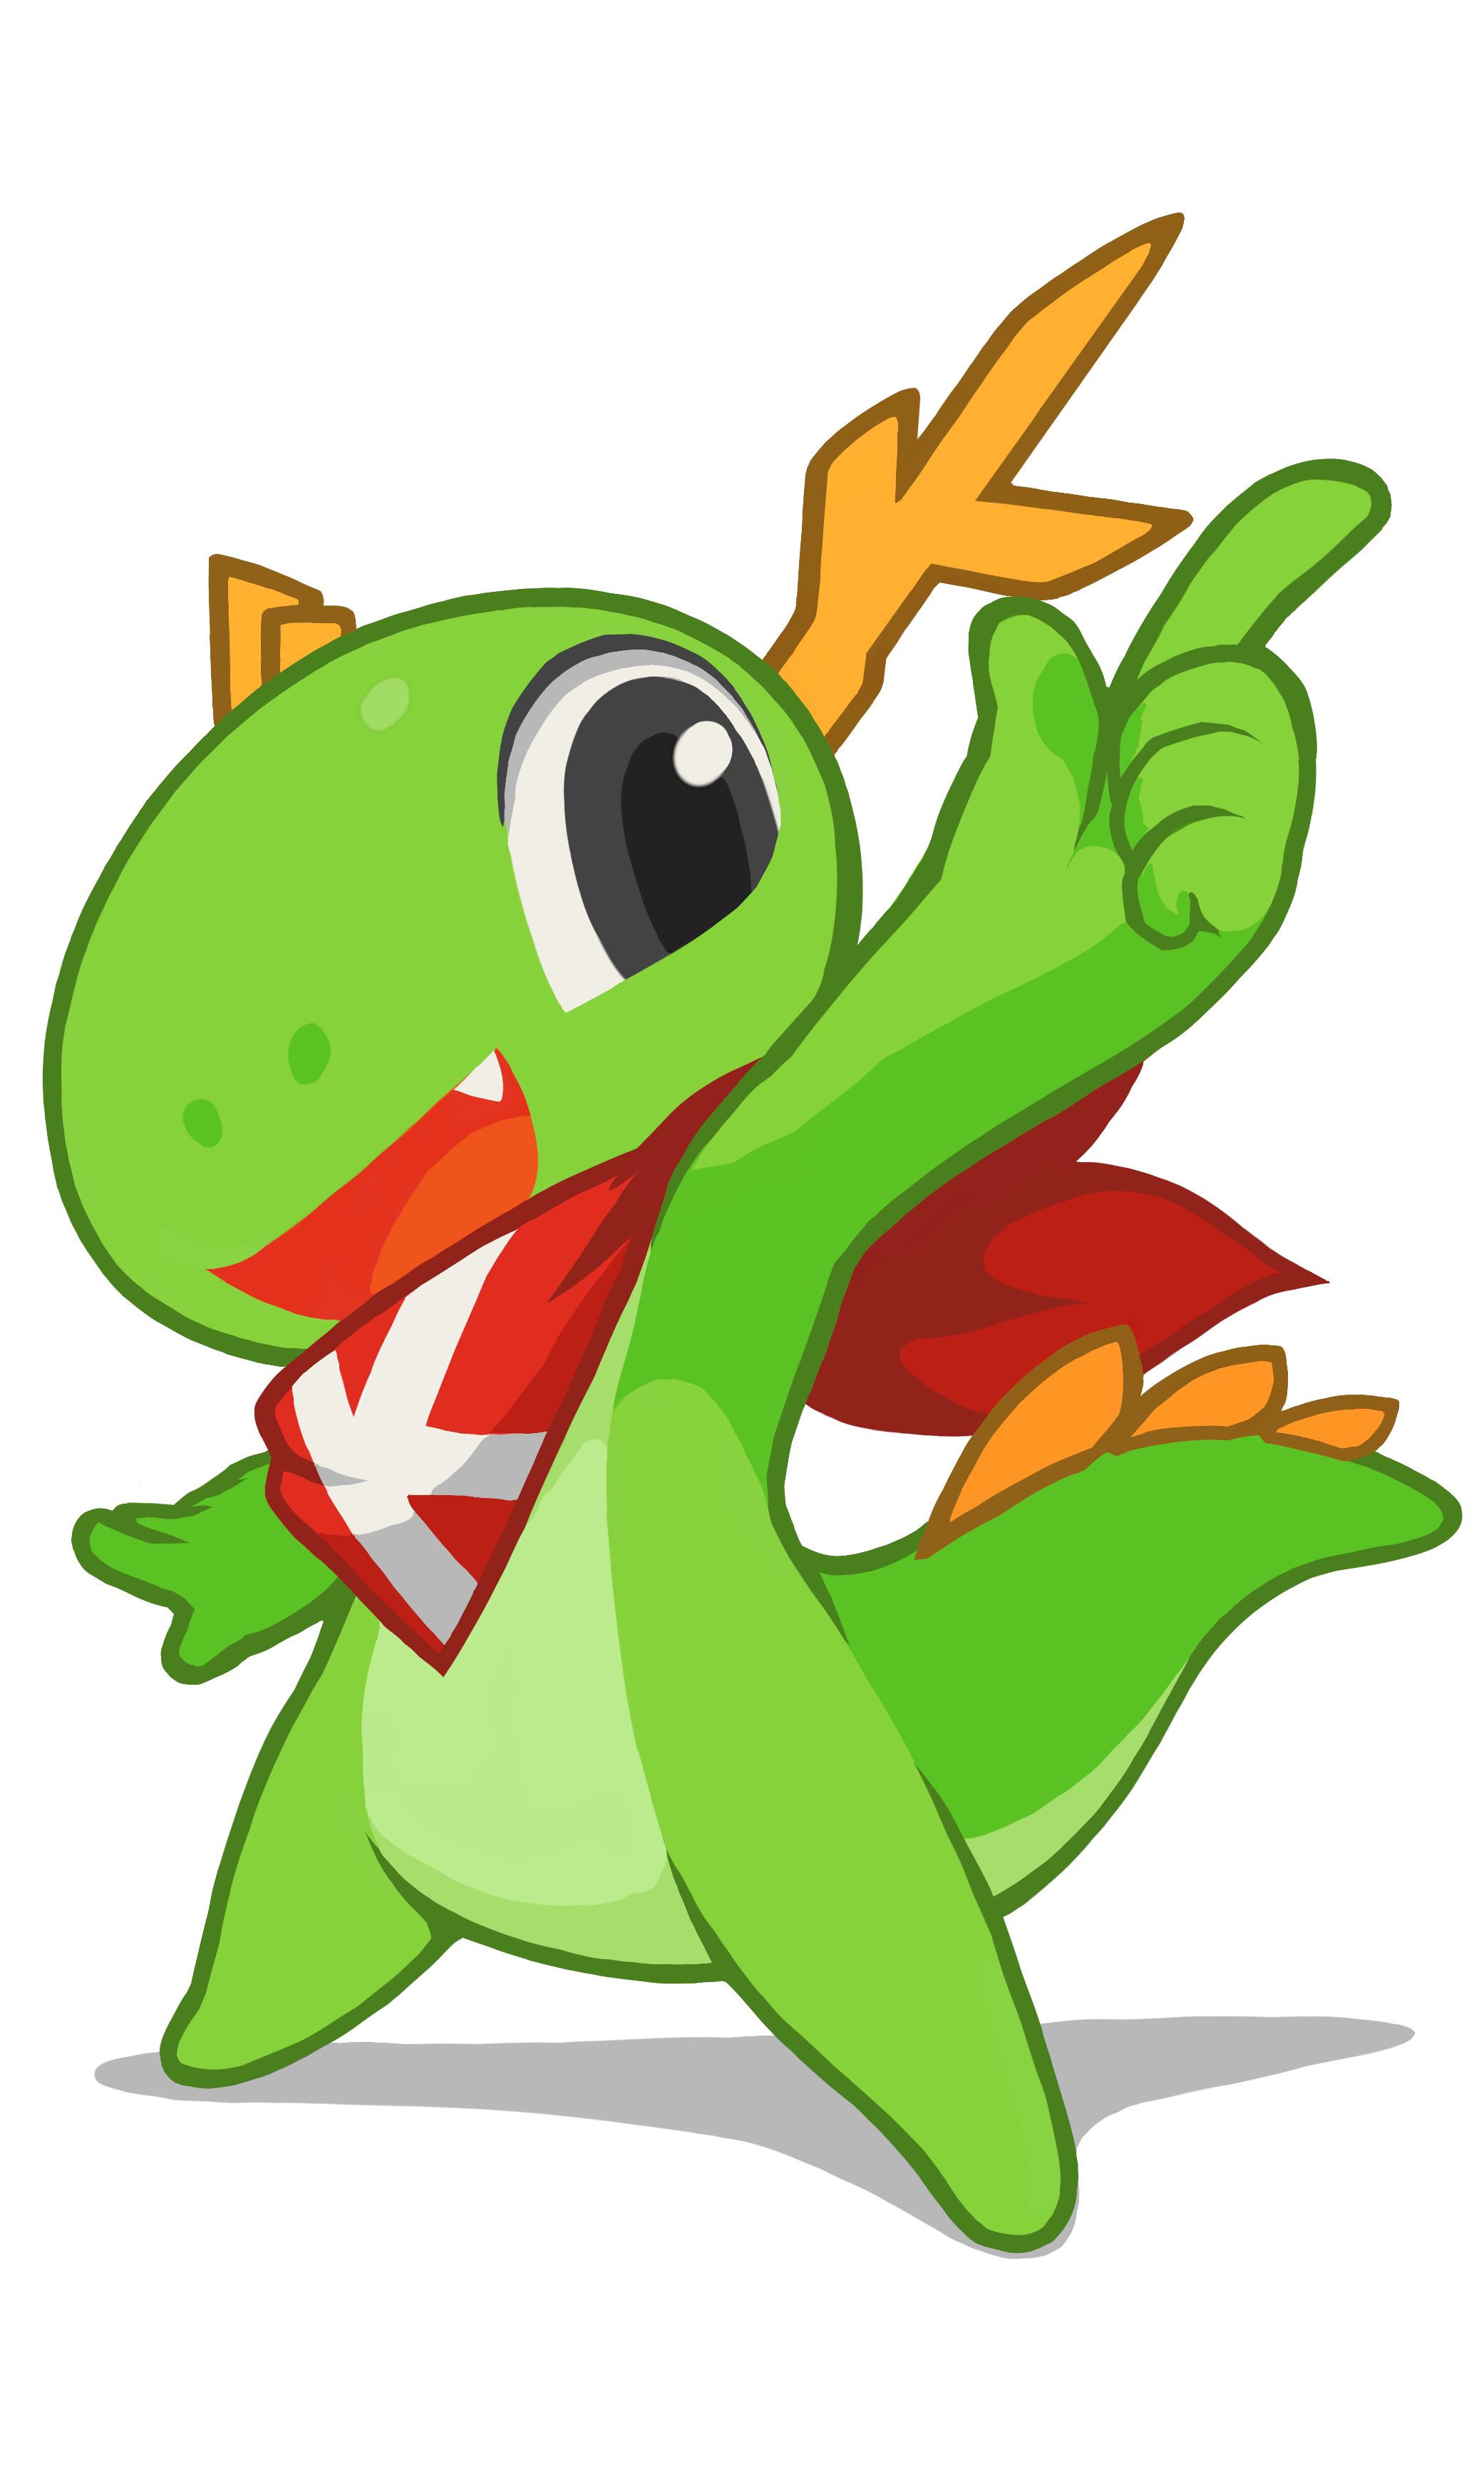 Konqi, the KDE mascot